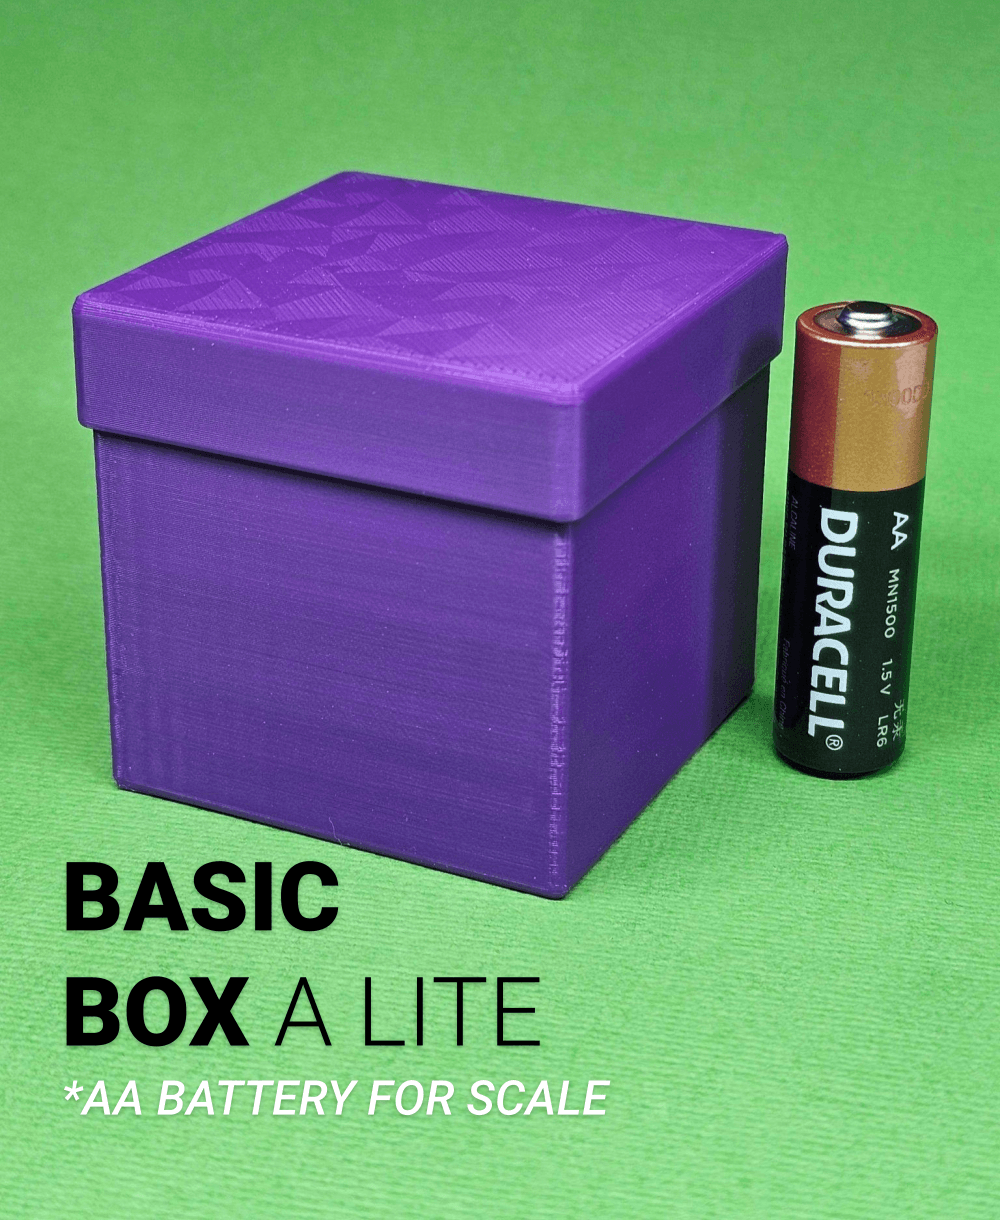 Basic Box A Lite | Gift box | Storage box | Organization | For Christmas gifts & birthday gifts 3d model